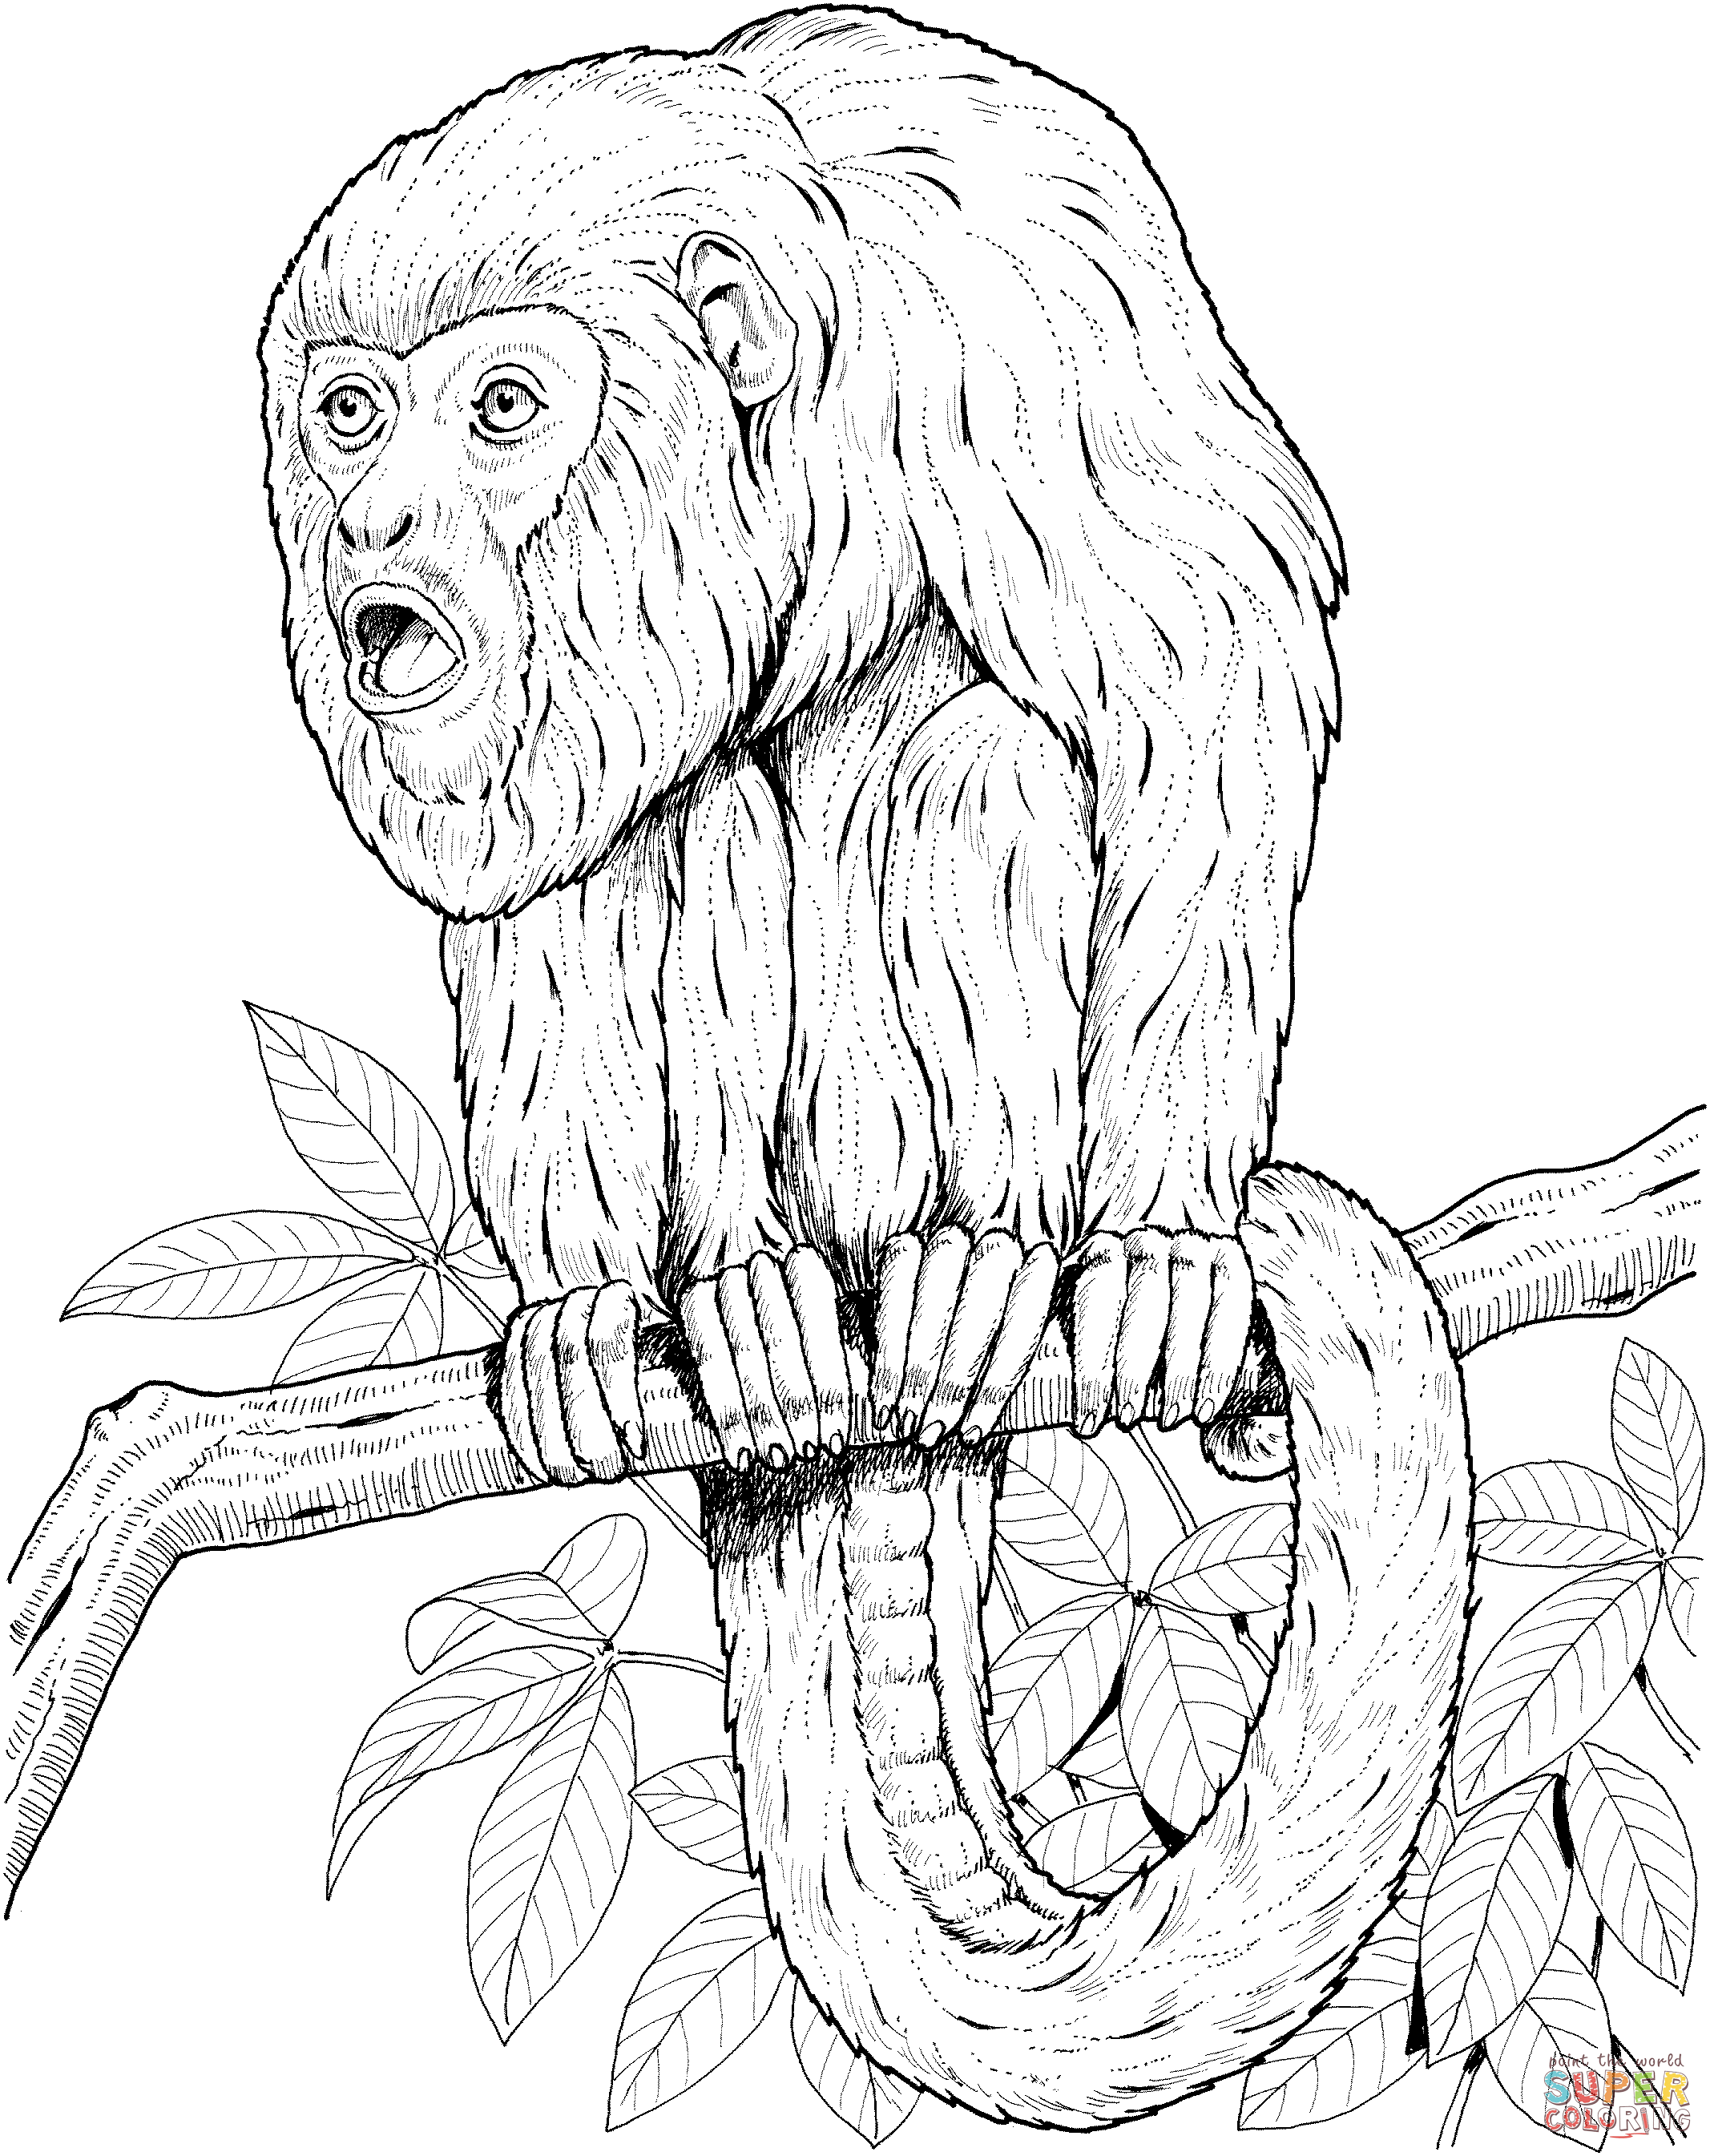 Howler Monkey coloring #6, Download drawings